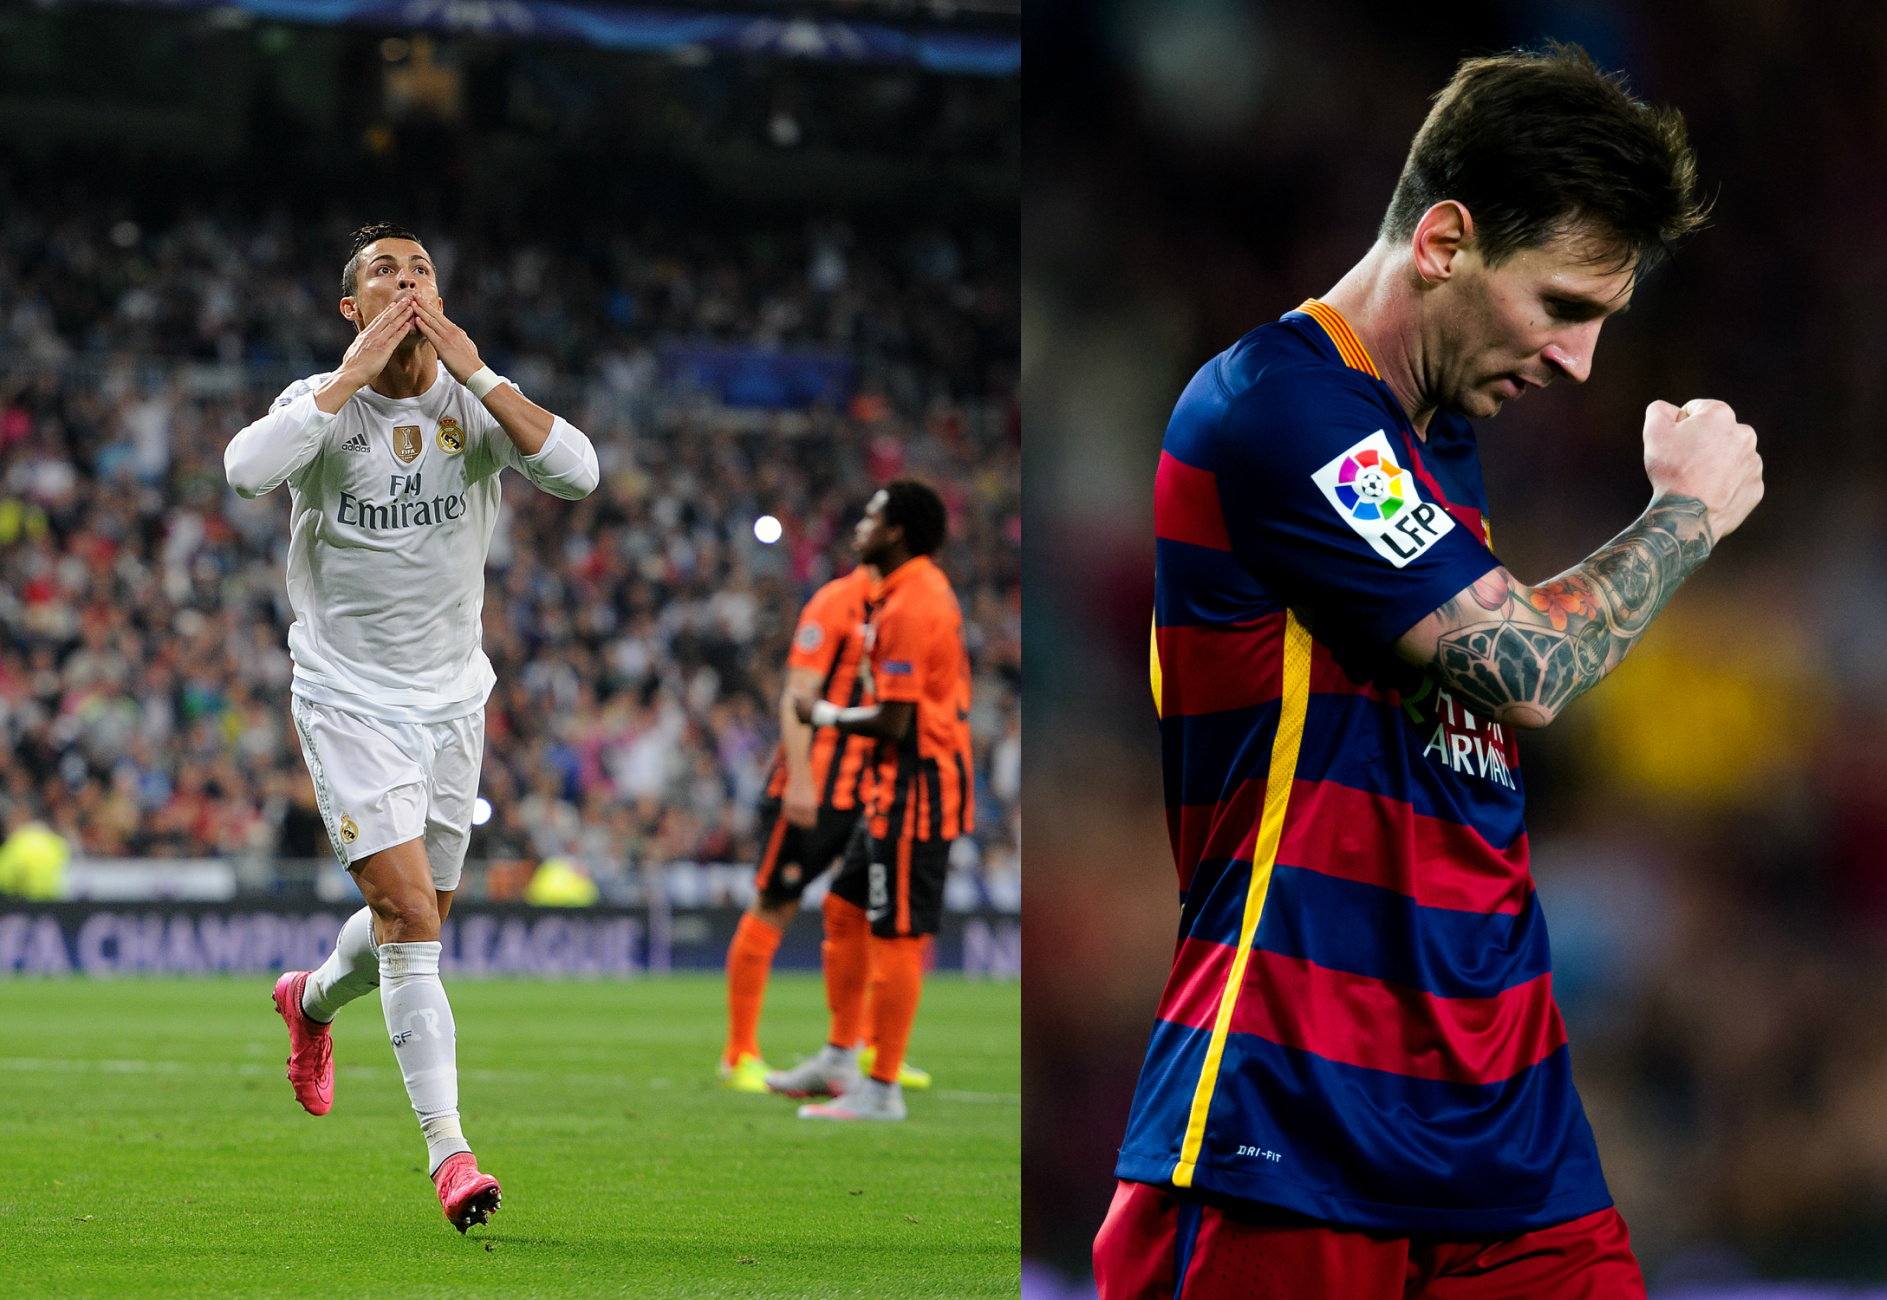 Messi vs. Ronaldo 2015-16 - Week 4: 3 Goals For Ronaldo, 2 For Messi